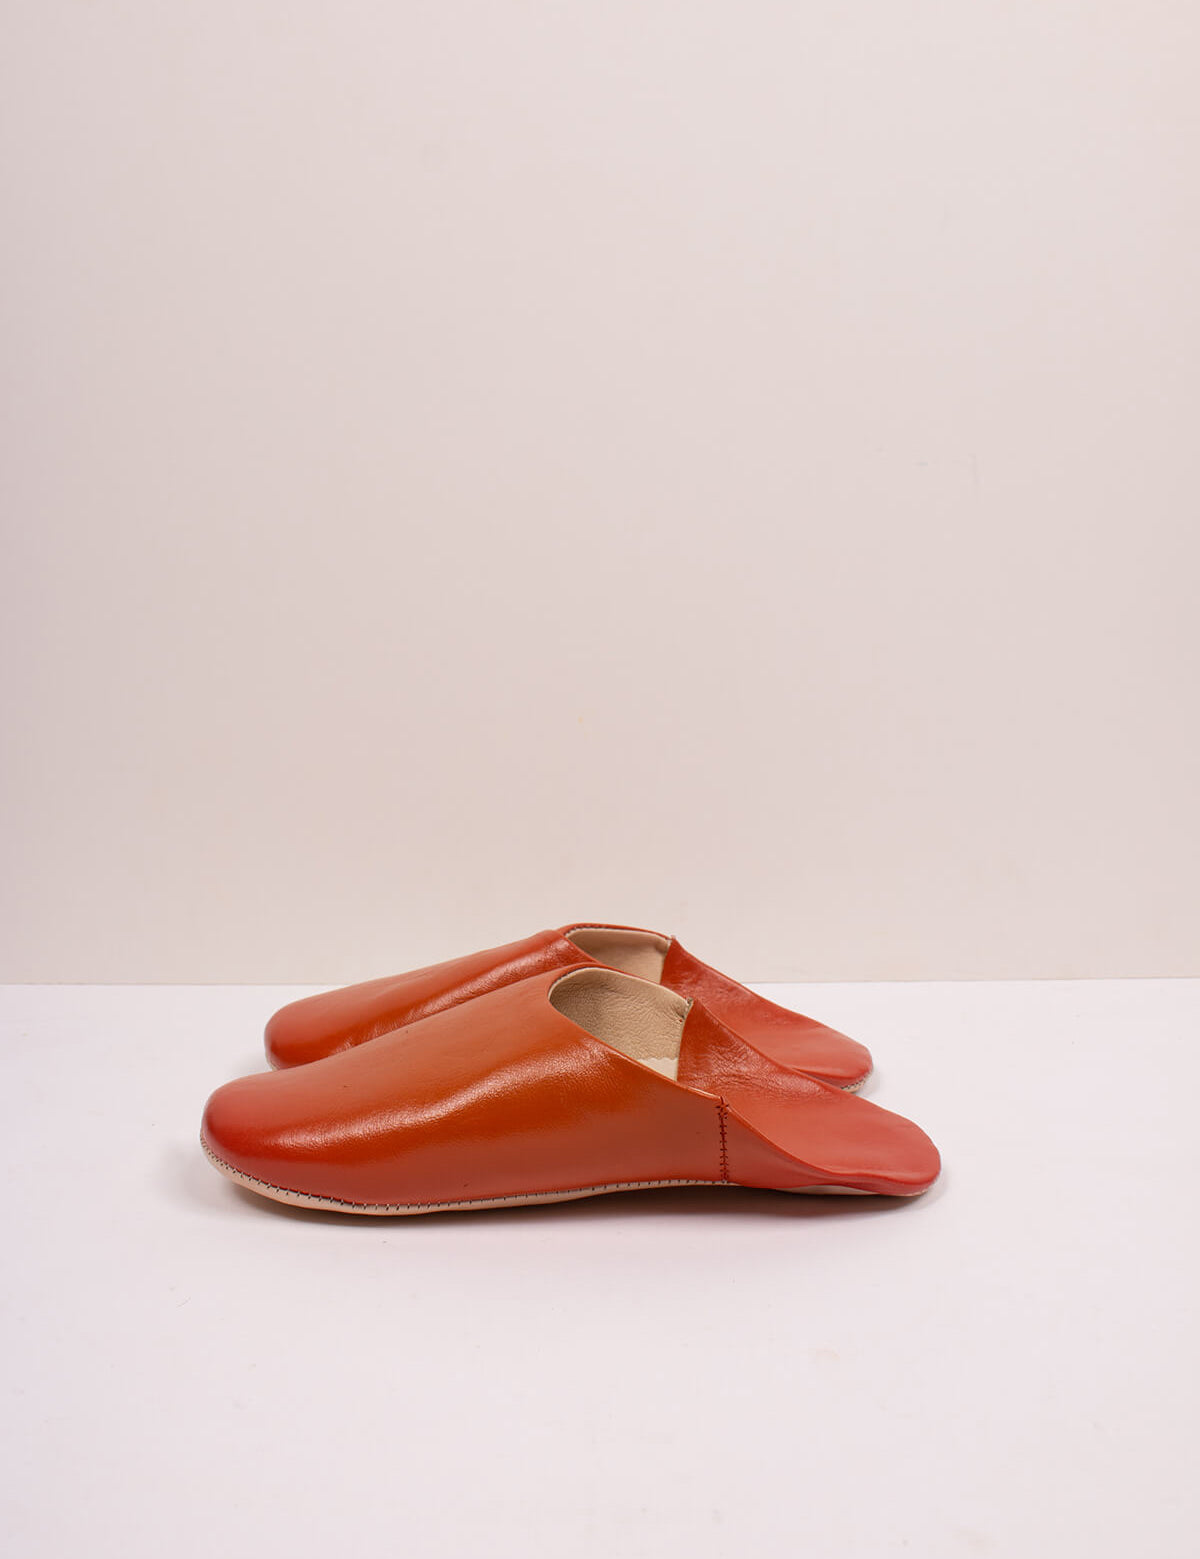 Bohemia-design-moroccan-babouche-slippers-burnt-orange-womens.jpg